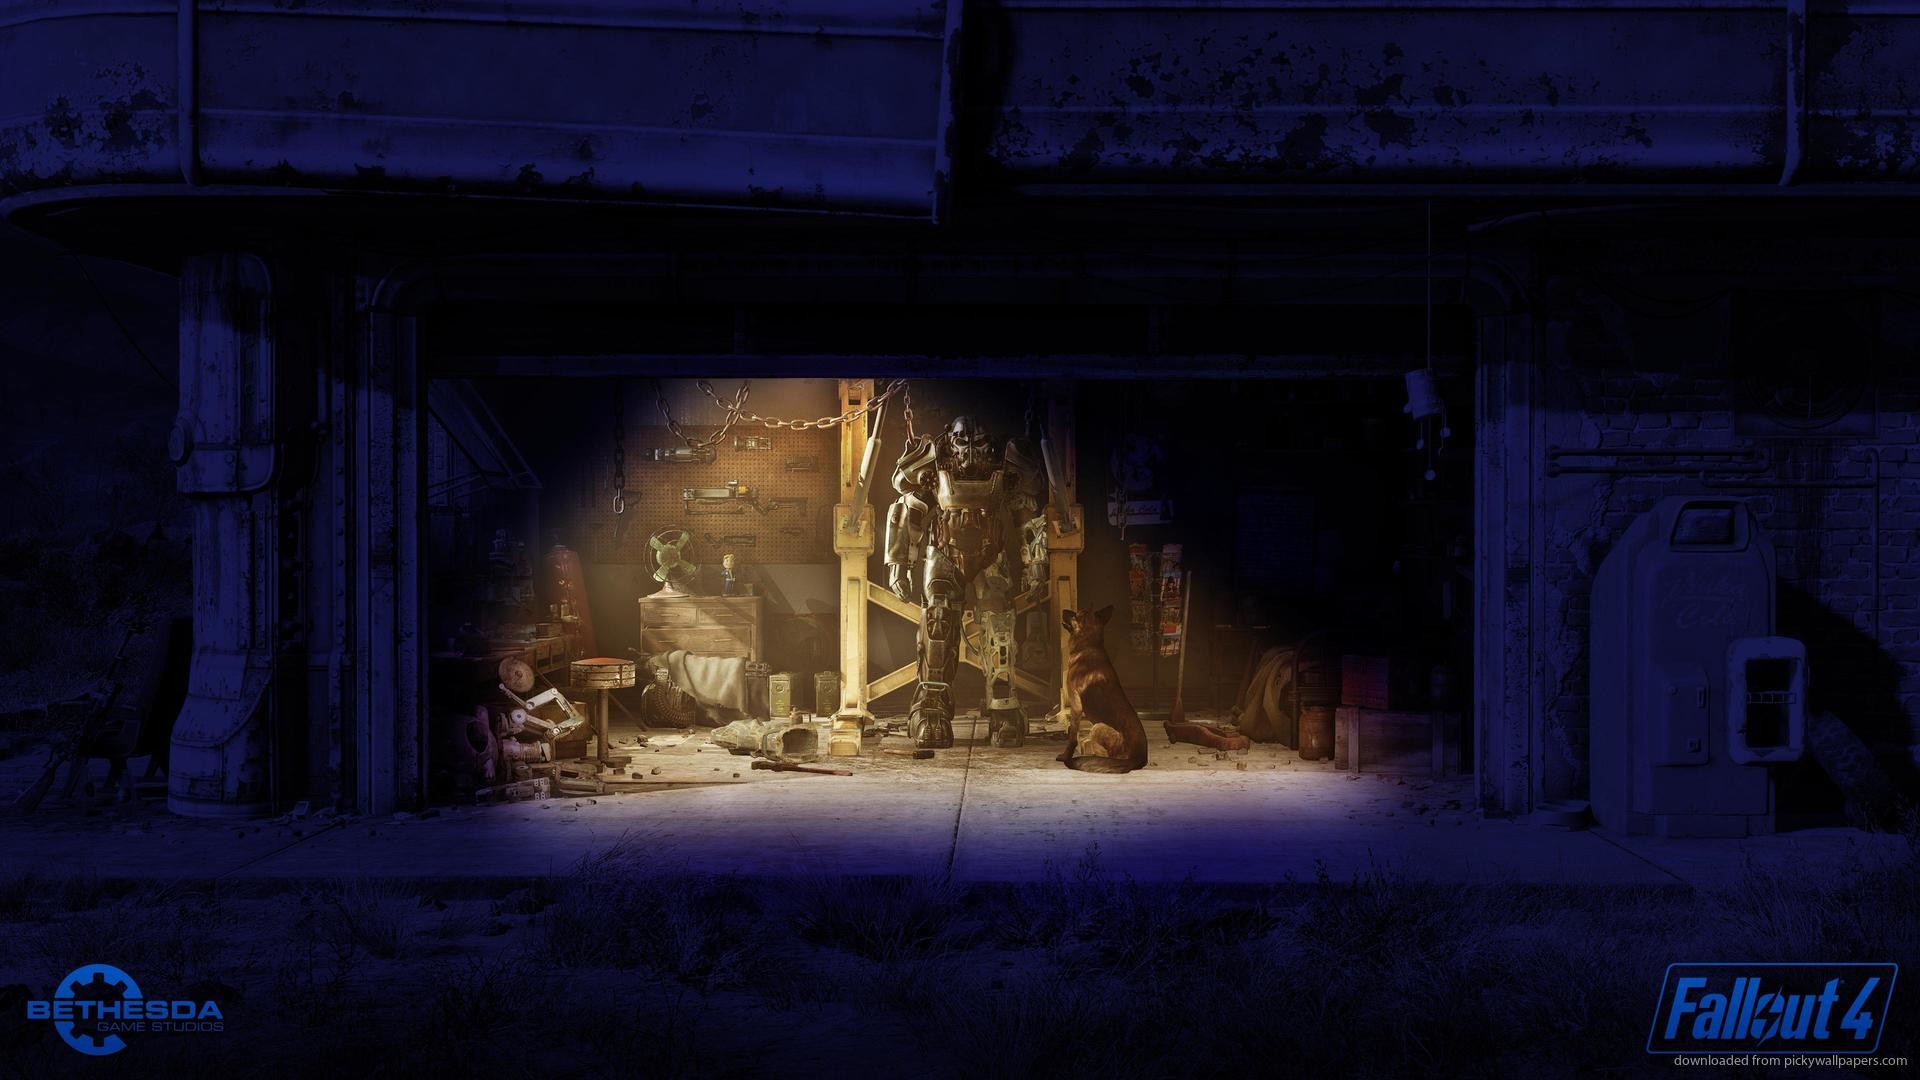 1920x1080 2560x1440 Fallout 4 Garage Night Wallpaper wallpaper